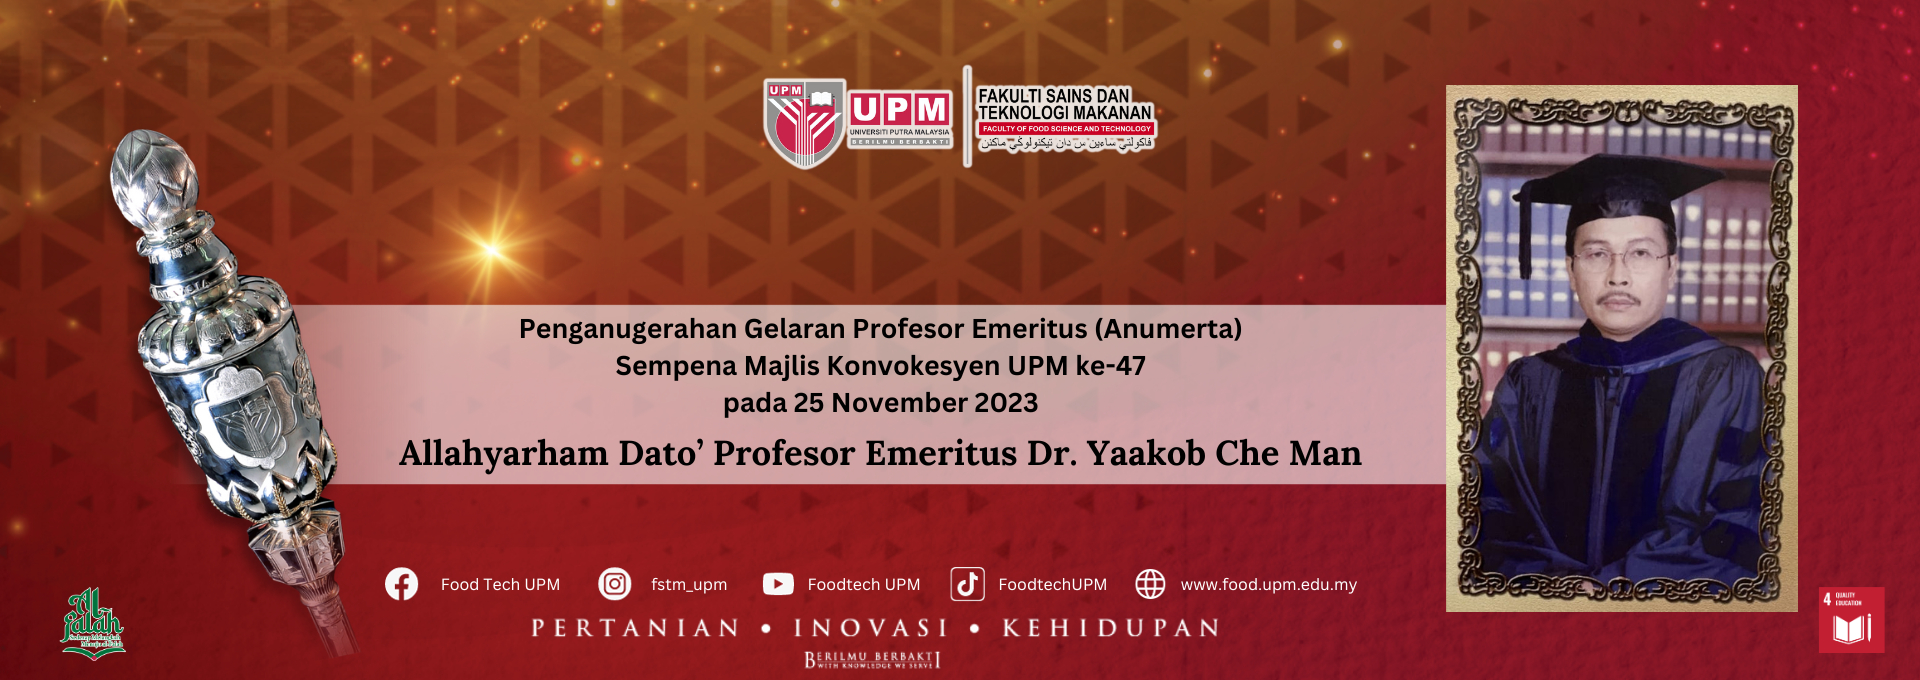 Allahyarham Datoâ€™ Profesor Emeritus Dr. Yaakob Che Man